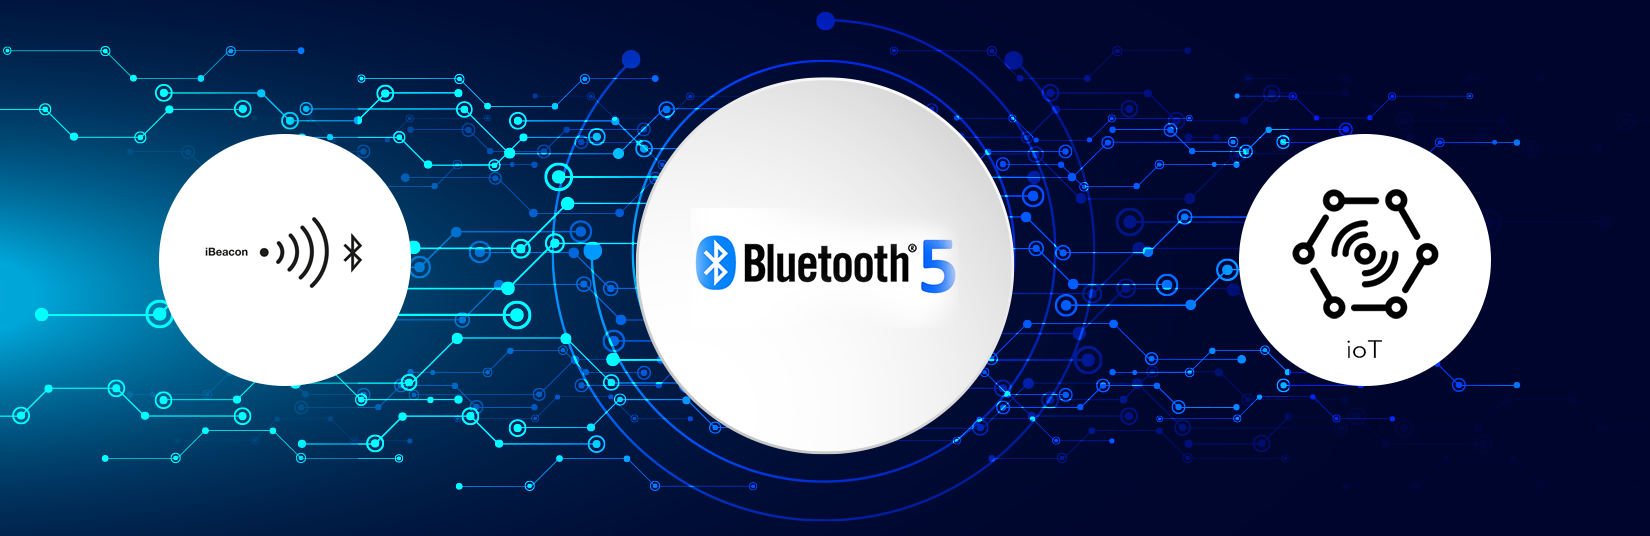 Bluetooth-5-impact-IoT